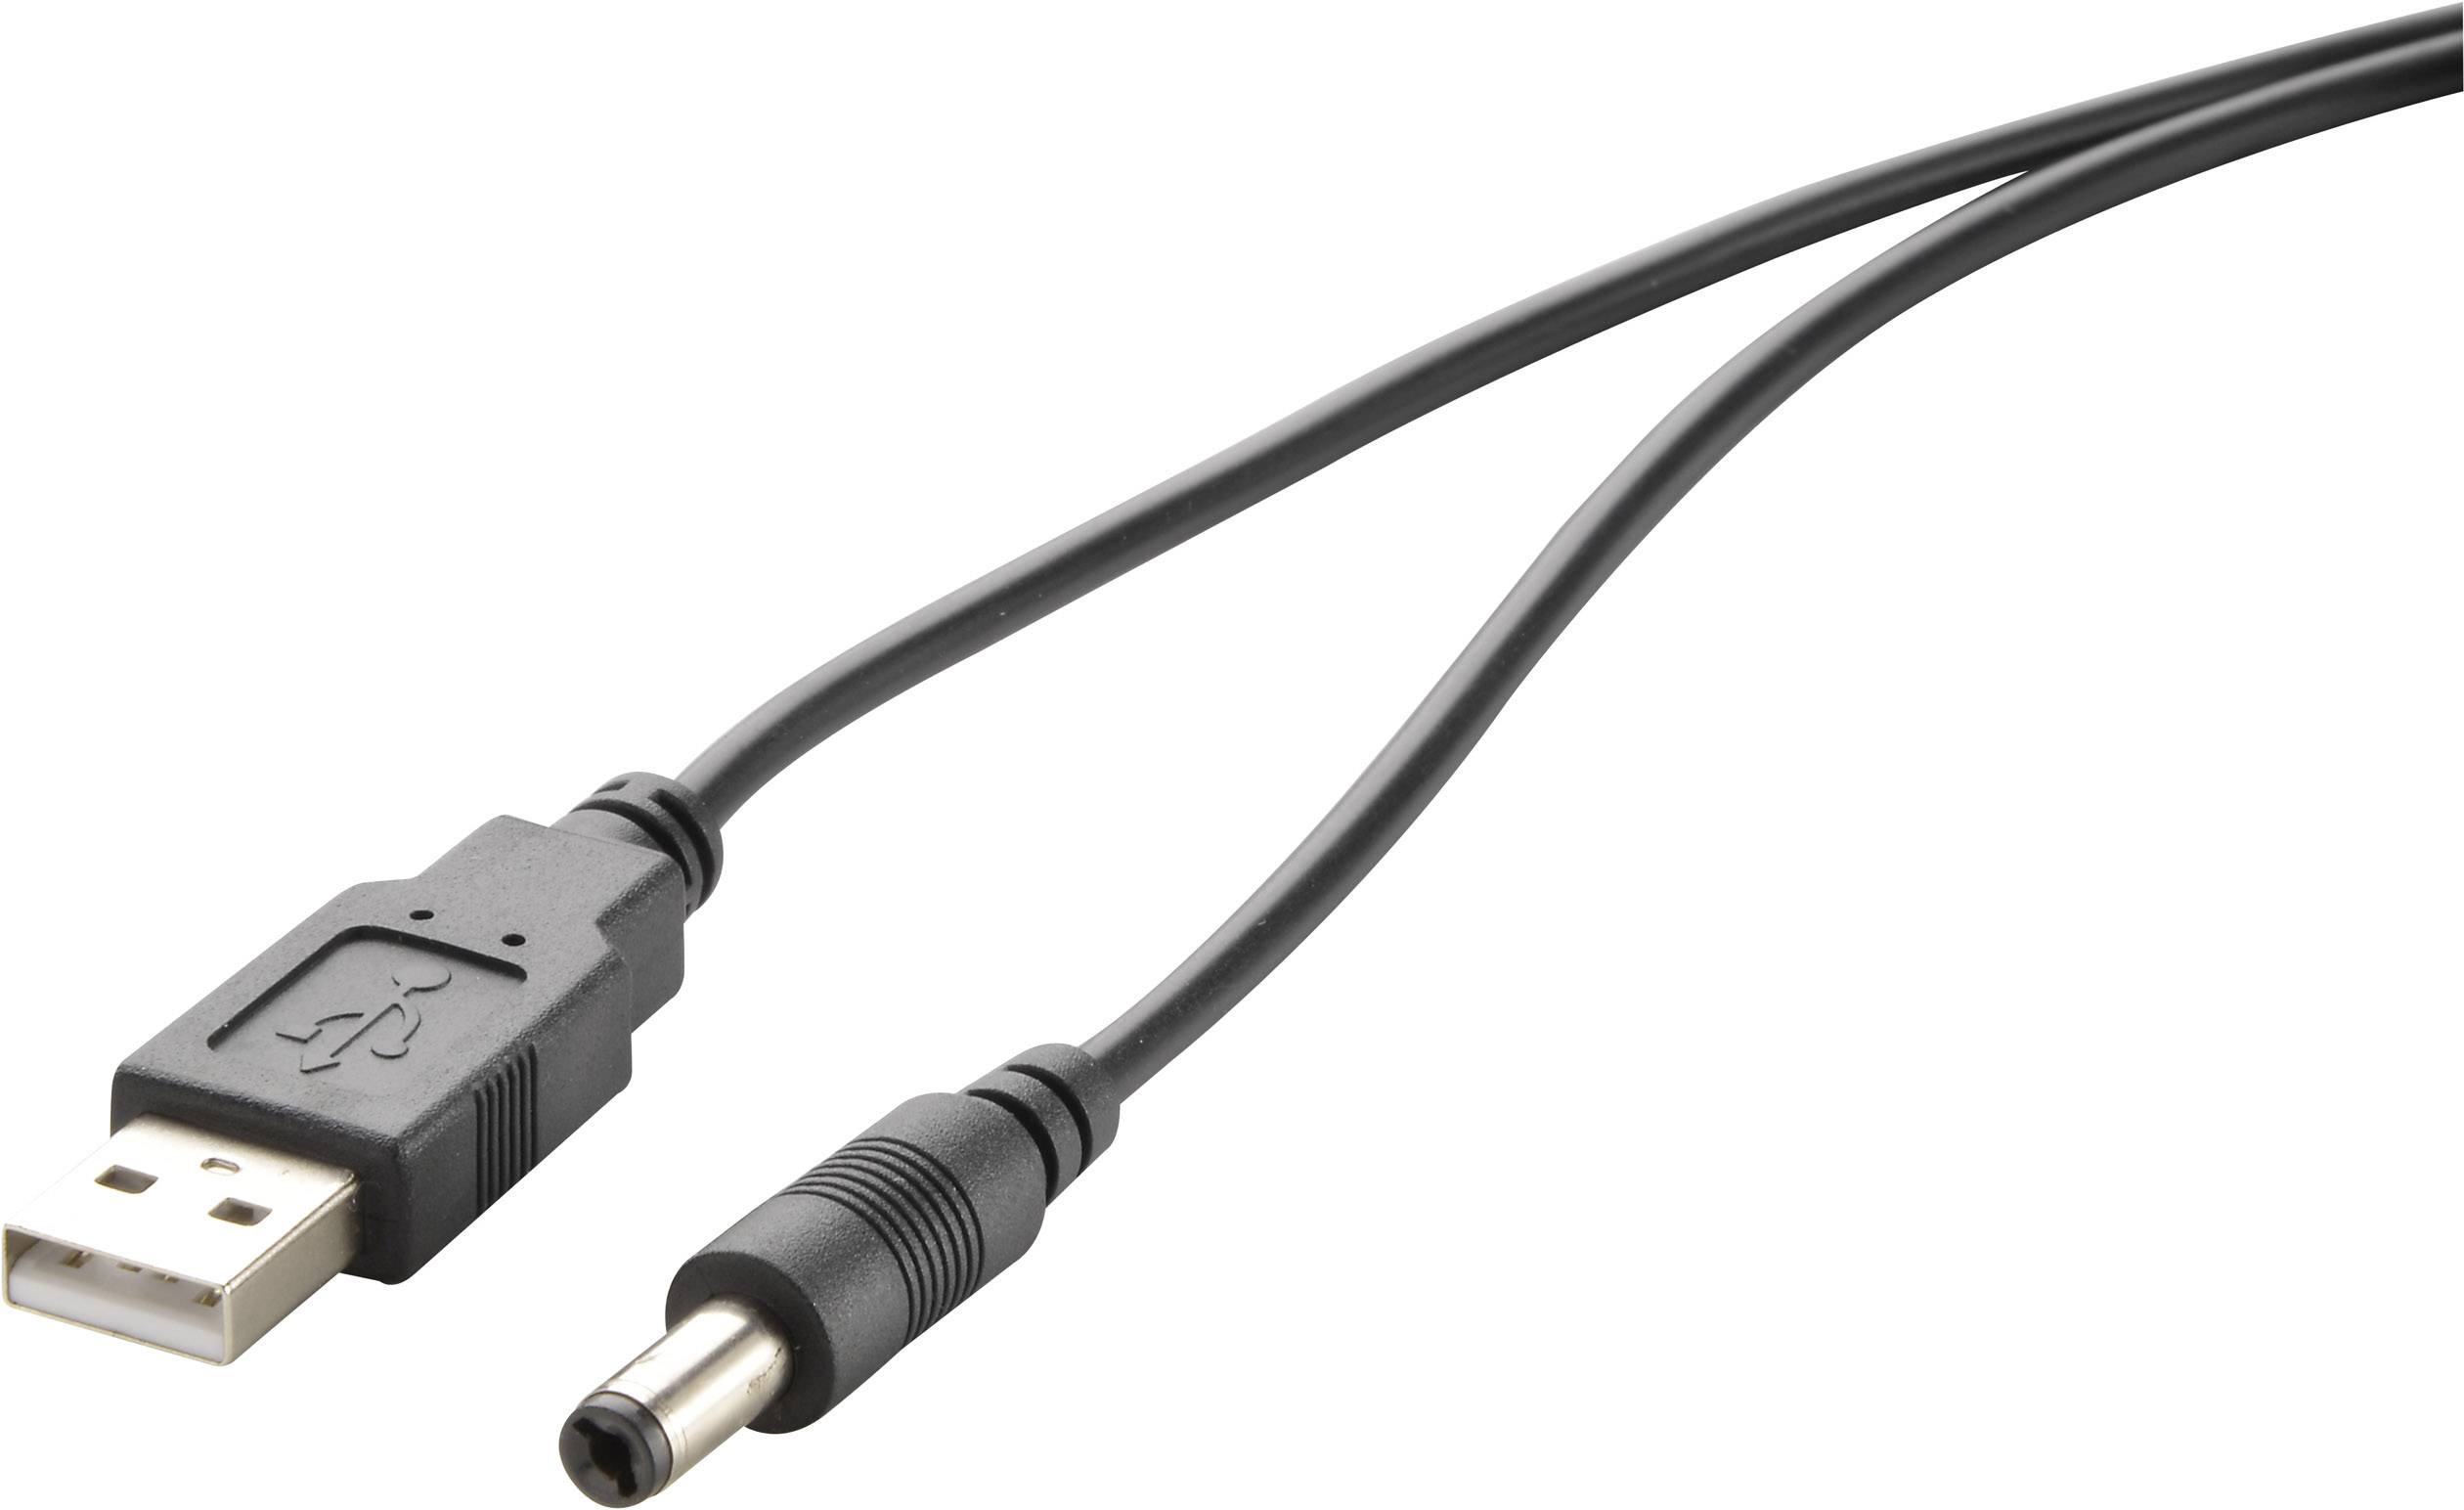 CONRAD Renkforce USB 2.0 Kabel [1x USB 2.0 Stecker A - 1x DC-Stecker 5.5 mm] 1 m Schwarz vergoldete